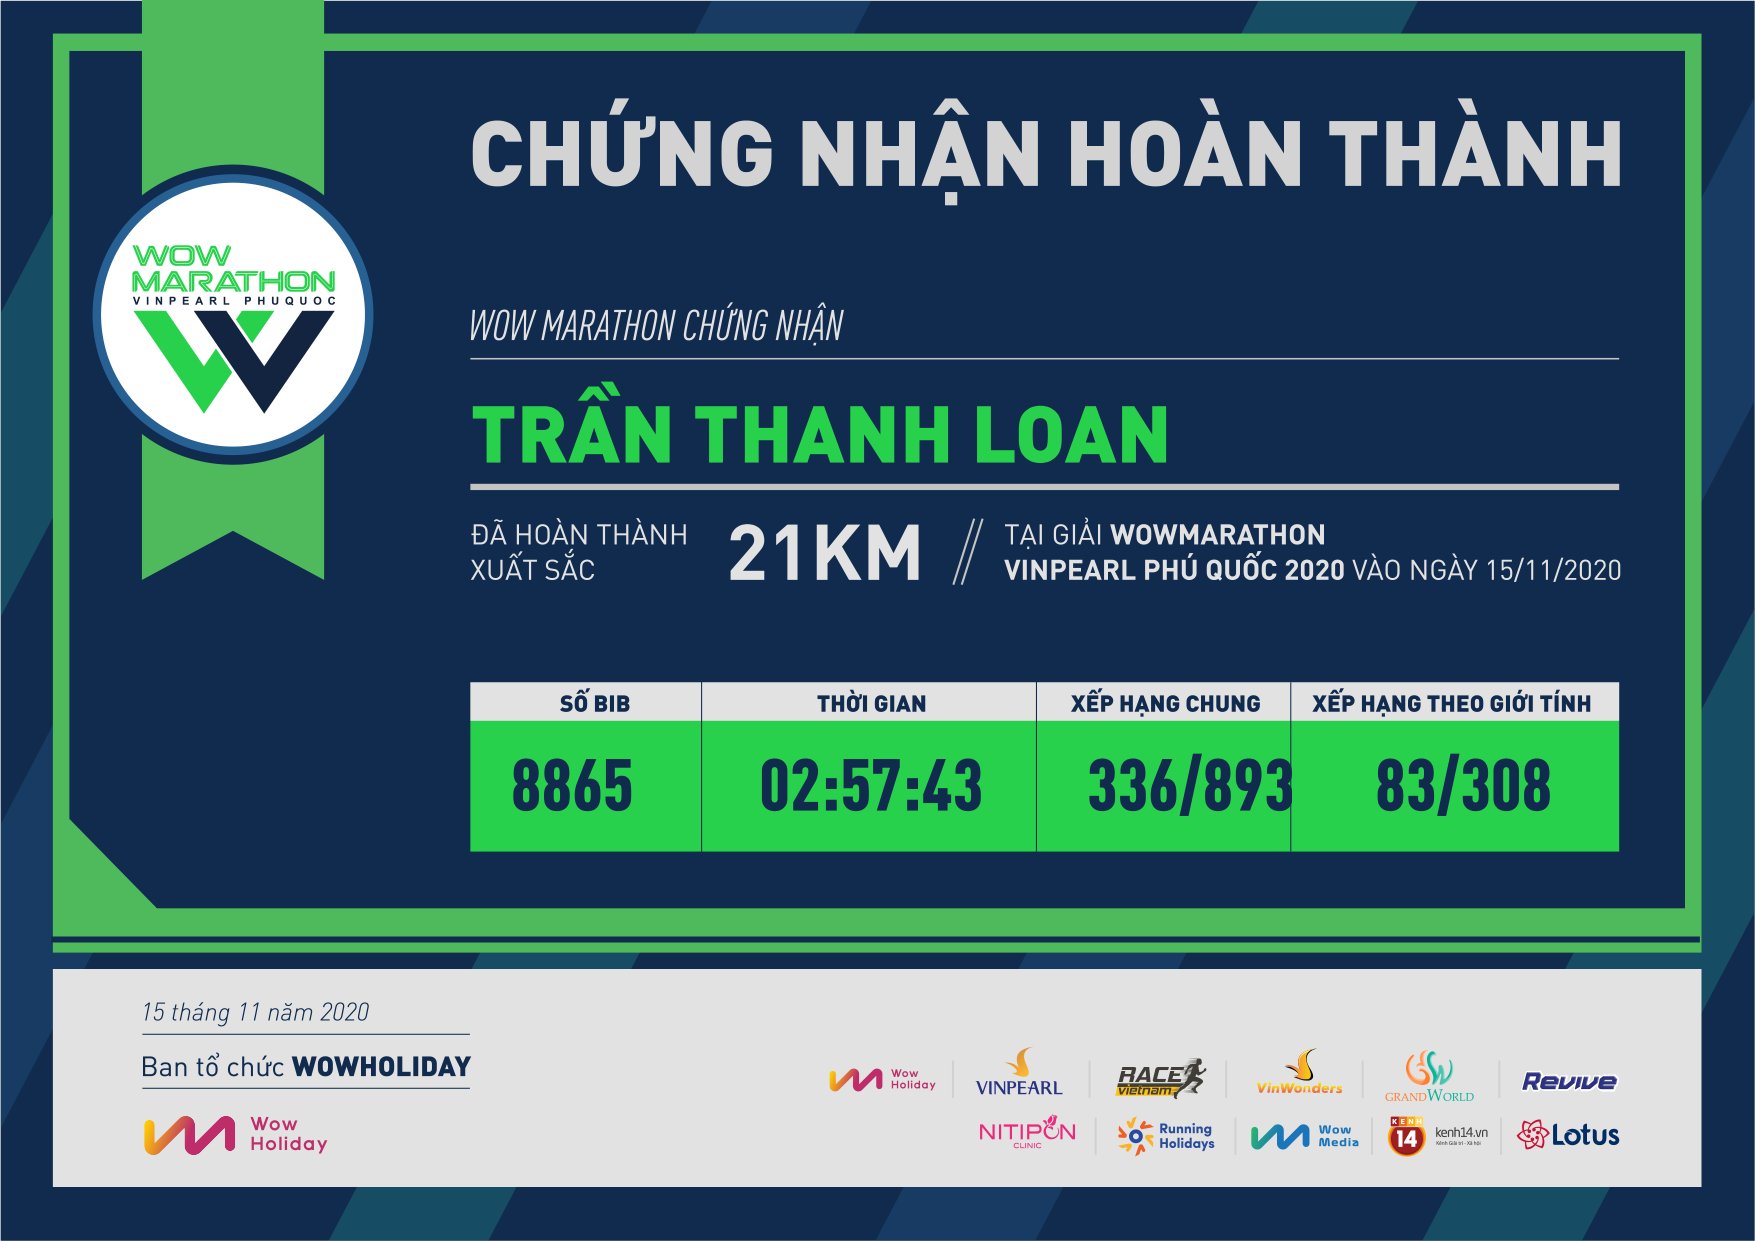 8865 - Trần Thanh Loan